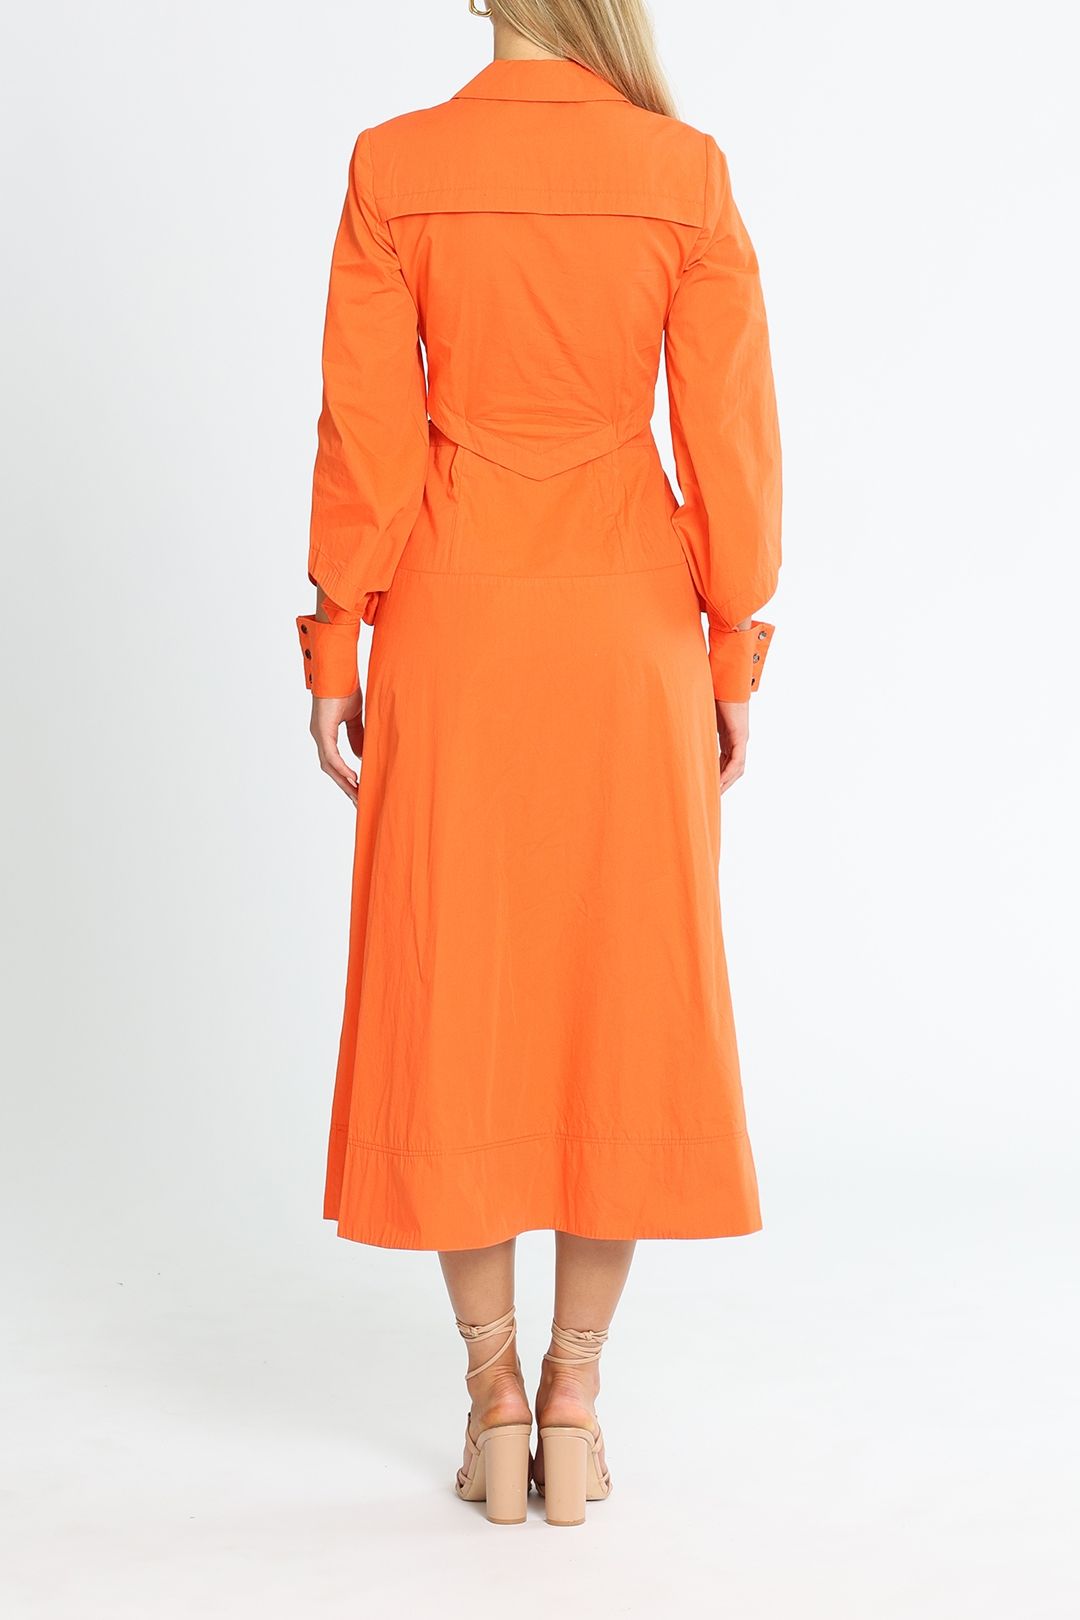 Cue Cotton Cut Out Shirt Dress Orange Midi